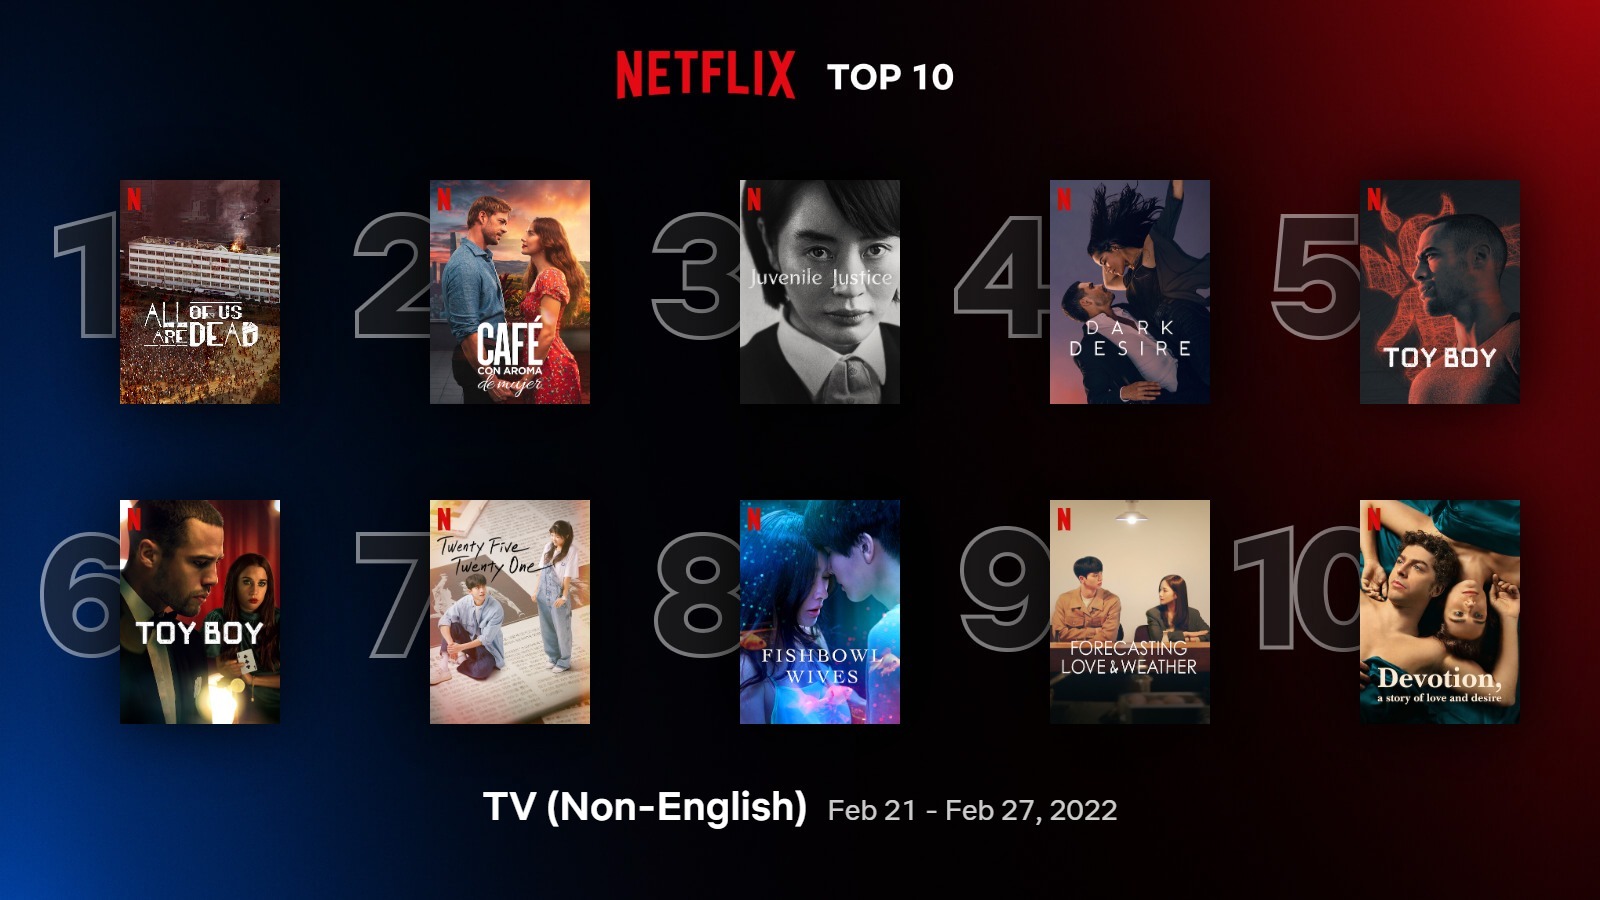 Top 10 serial televisi Netflix periode 21-27 Februari 2022. (Sumber gambar: Netflix)